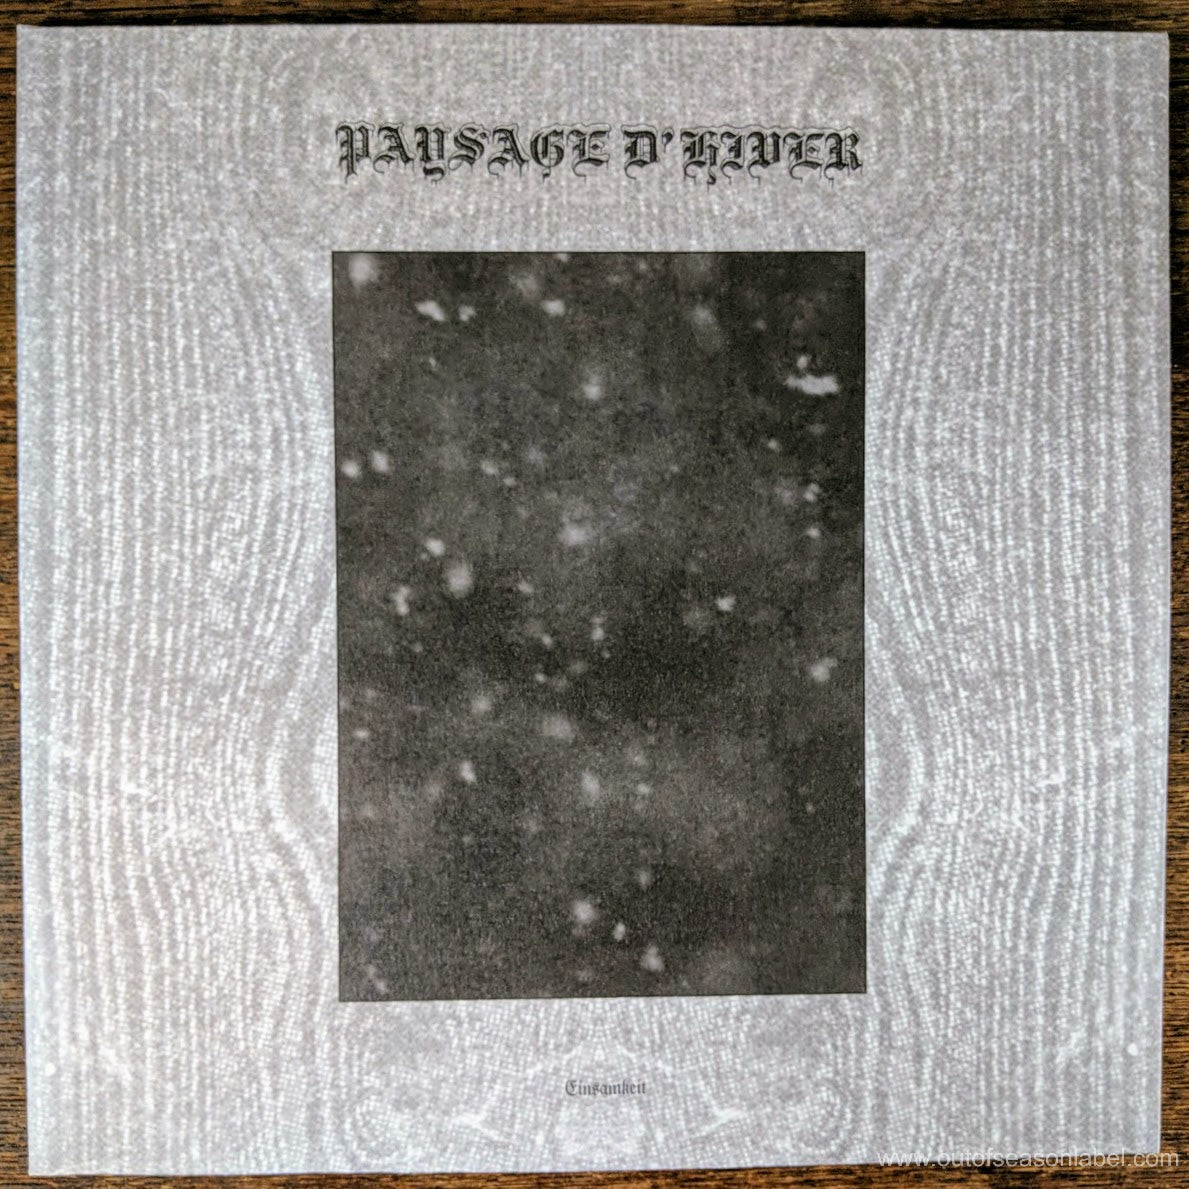 [SOLD OUT] PAYSAGE D'HIVER "Einsamkeit" Vinyl 2xLP (gatefold, etched)